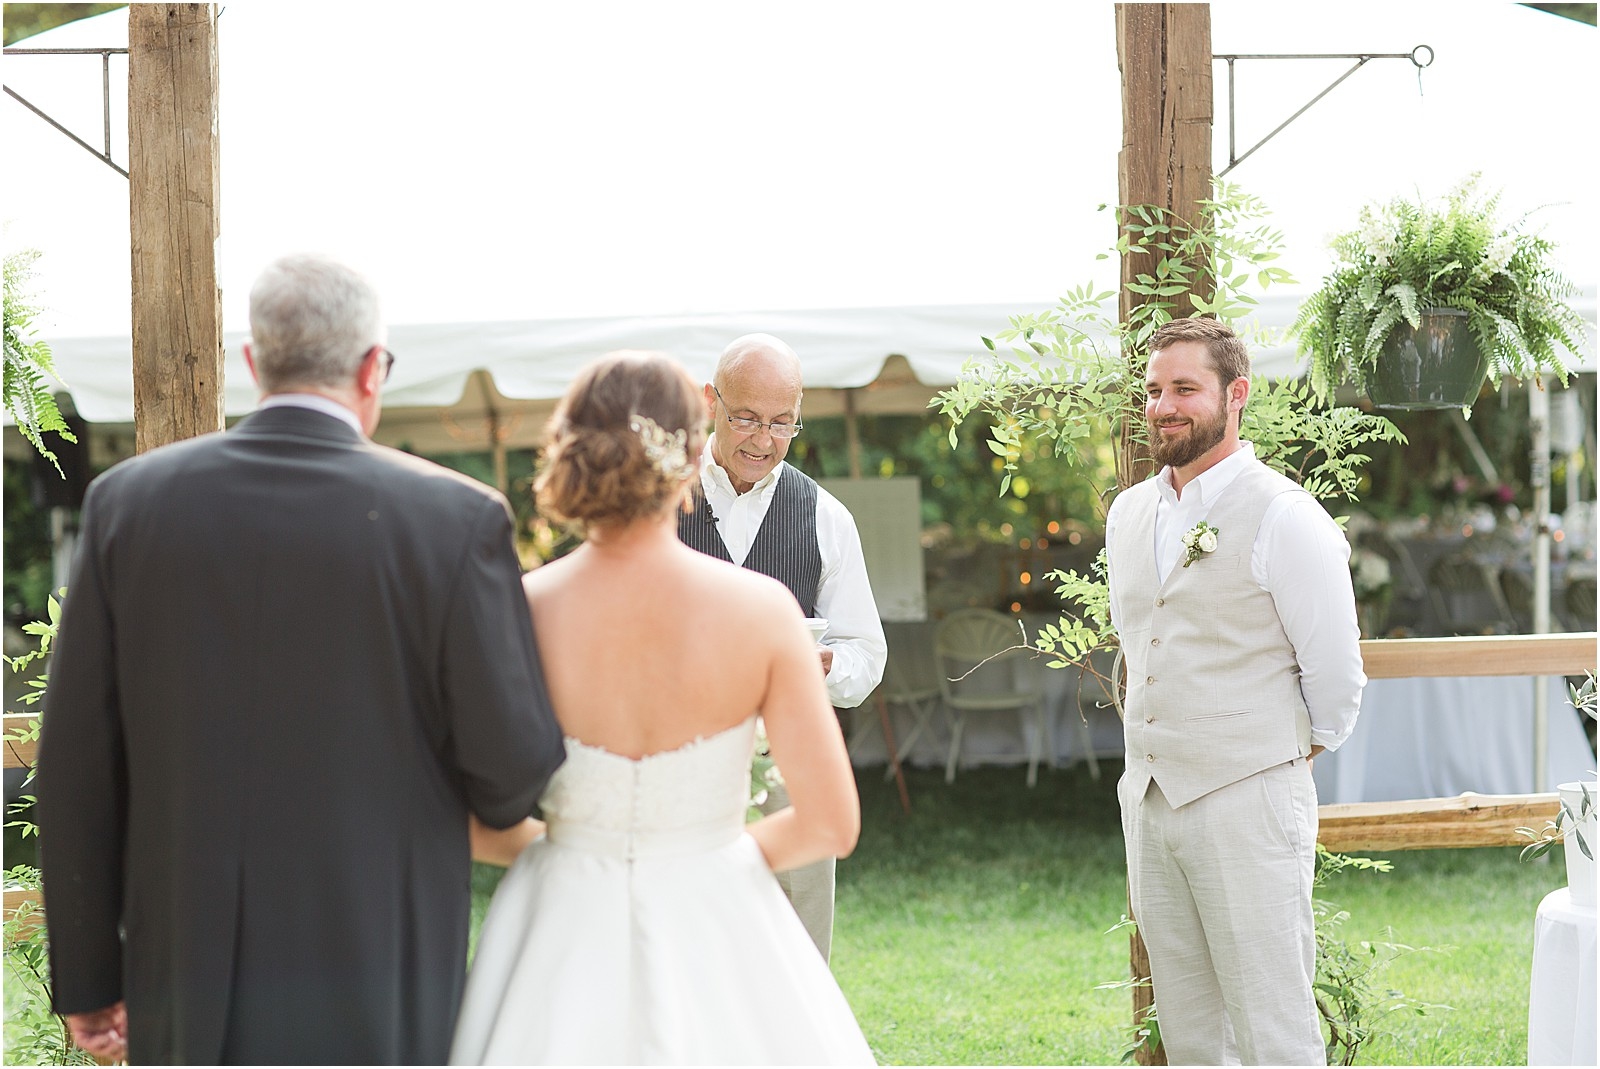 A Evansville Indiana Backyard Wedding | Bailey and Ben 062.jpg